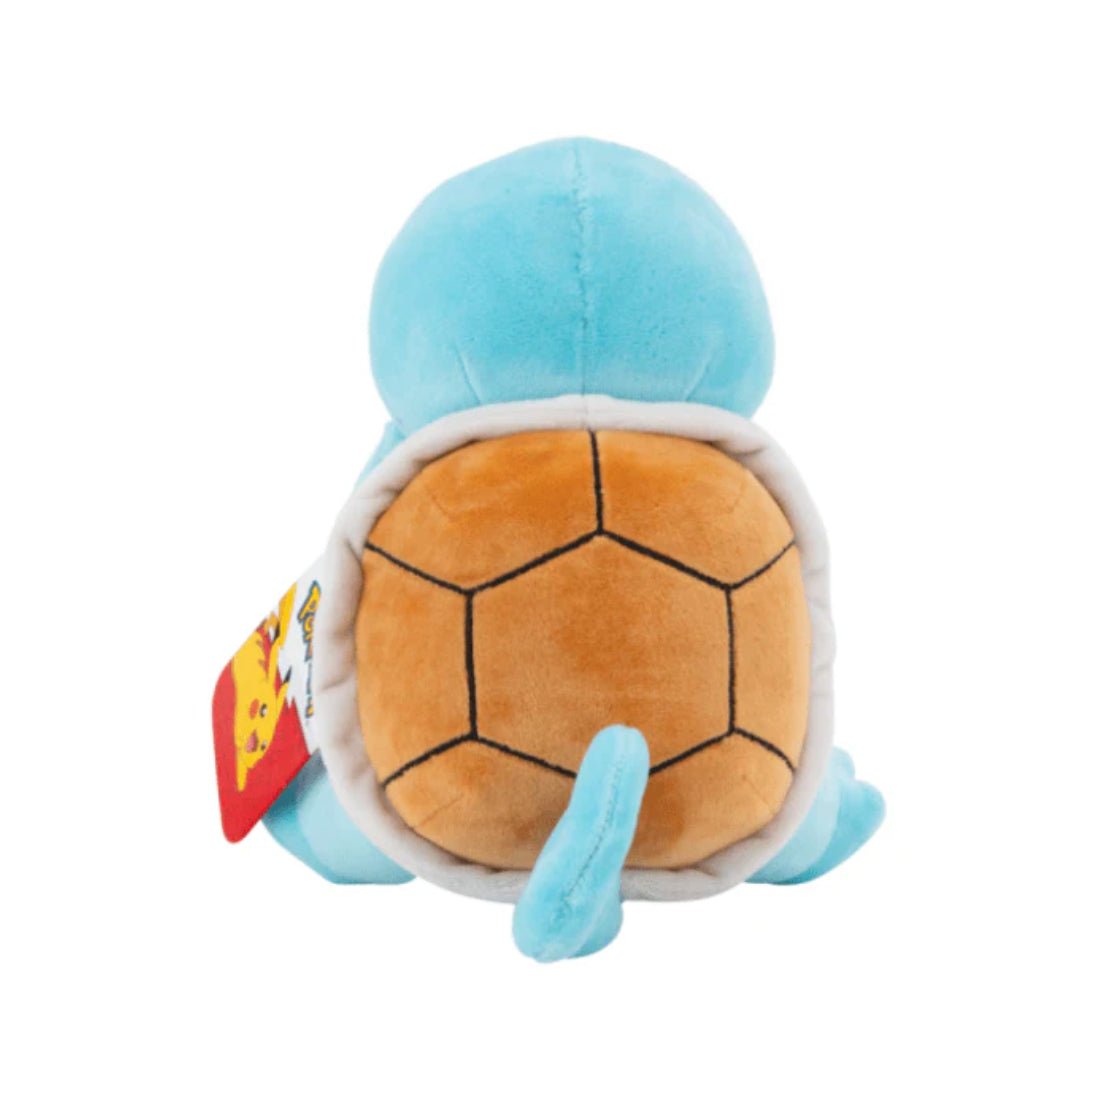 Pokemon Plush Toy - Squirtle - دمية - Store 974 | ستور ٩٧٤